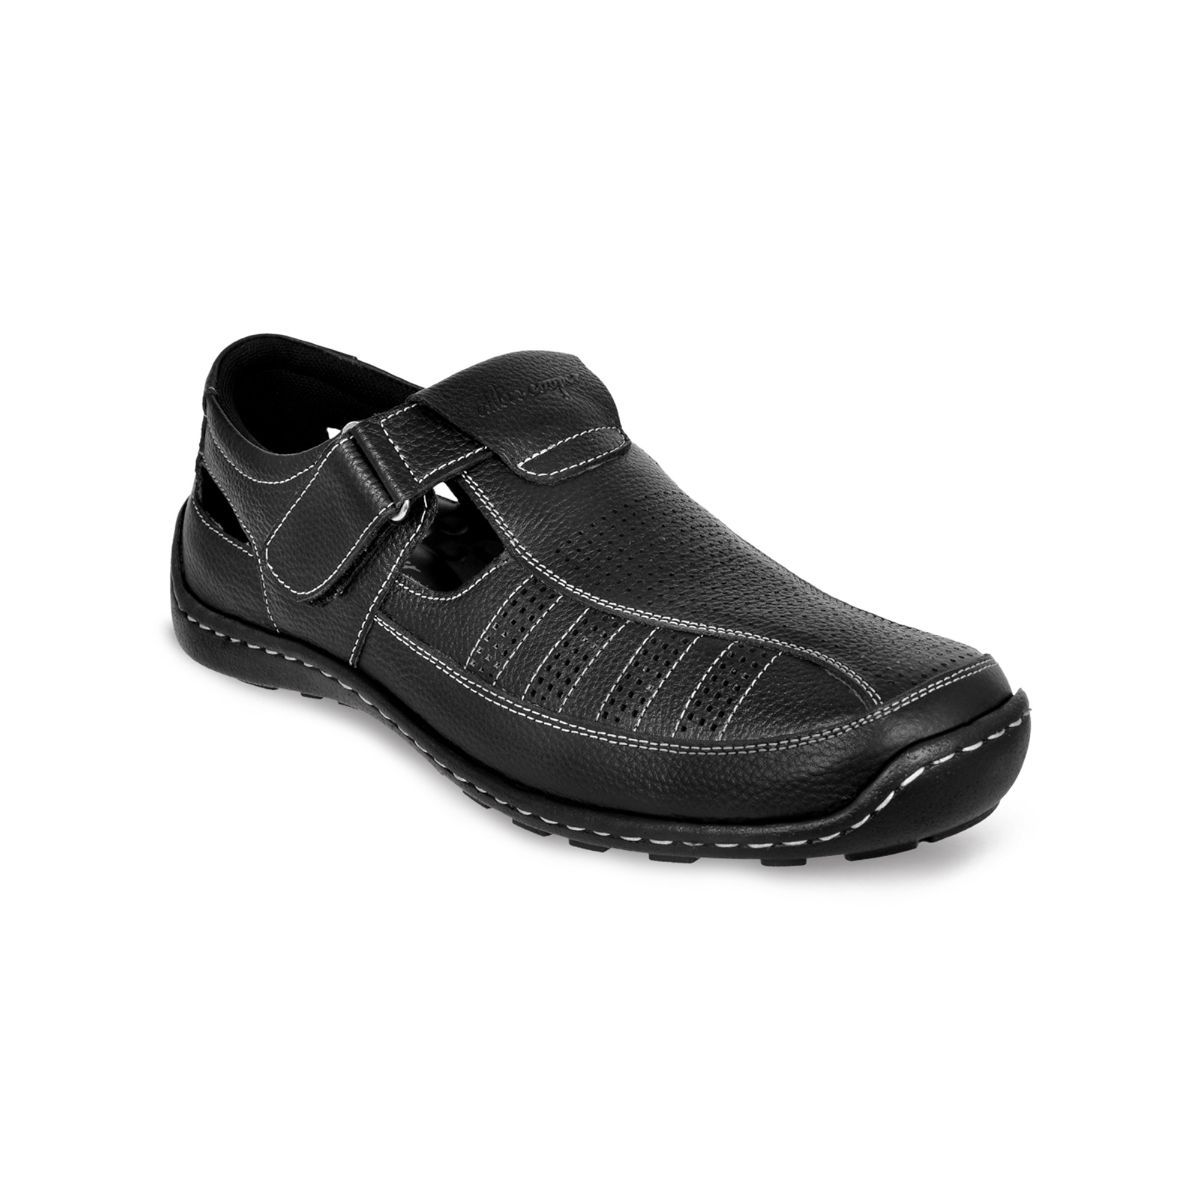 Allen Cooper Black Leather Sandals - 9